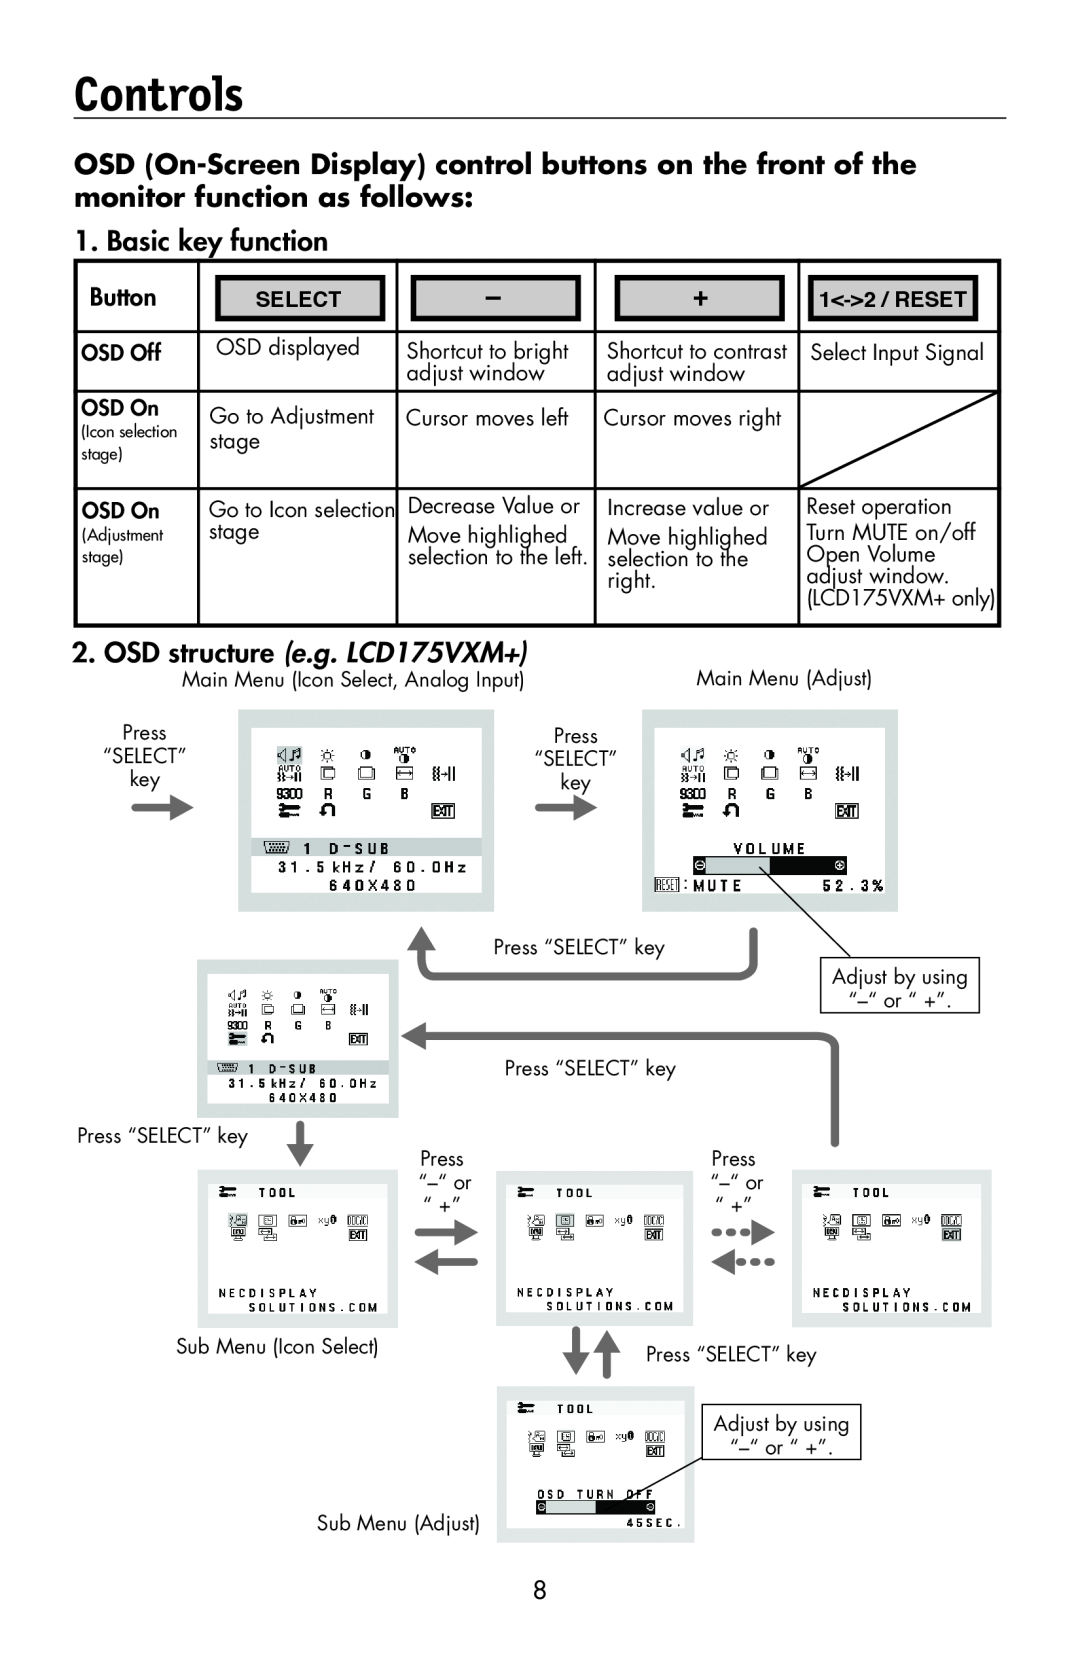 NEC user manual Controls, OSD structure e.g. LCD175VXM+, Select, 1<->2 /RESET 